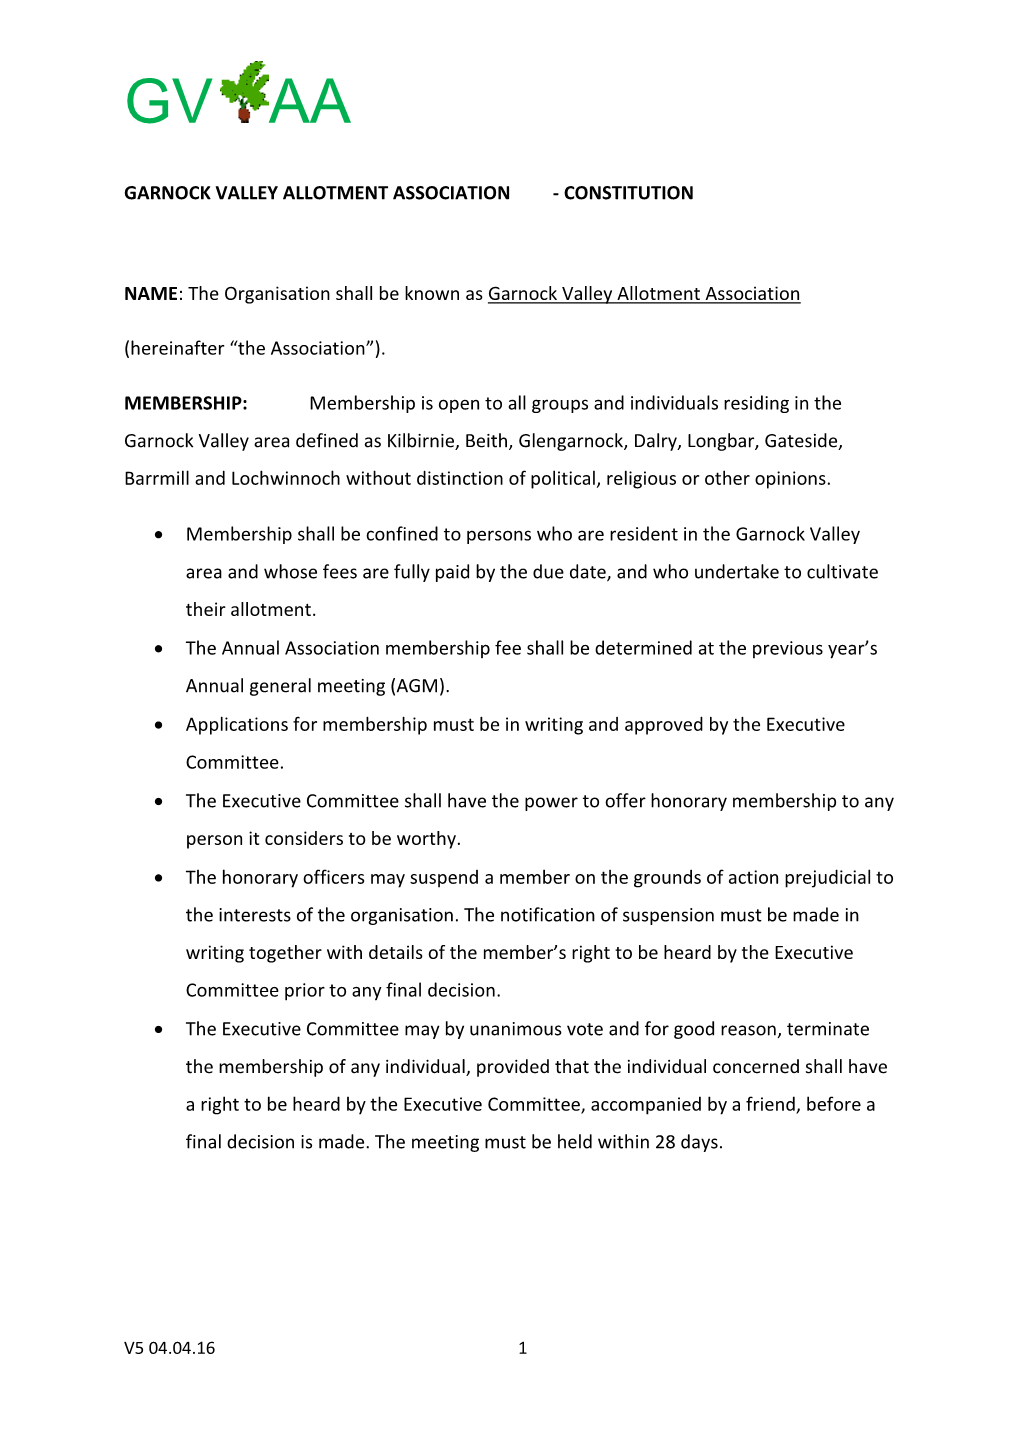 Garnock Valley Allotment Association - Constitution